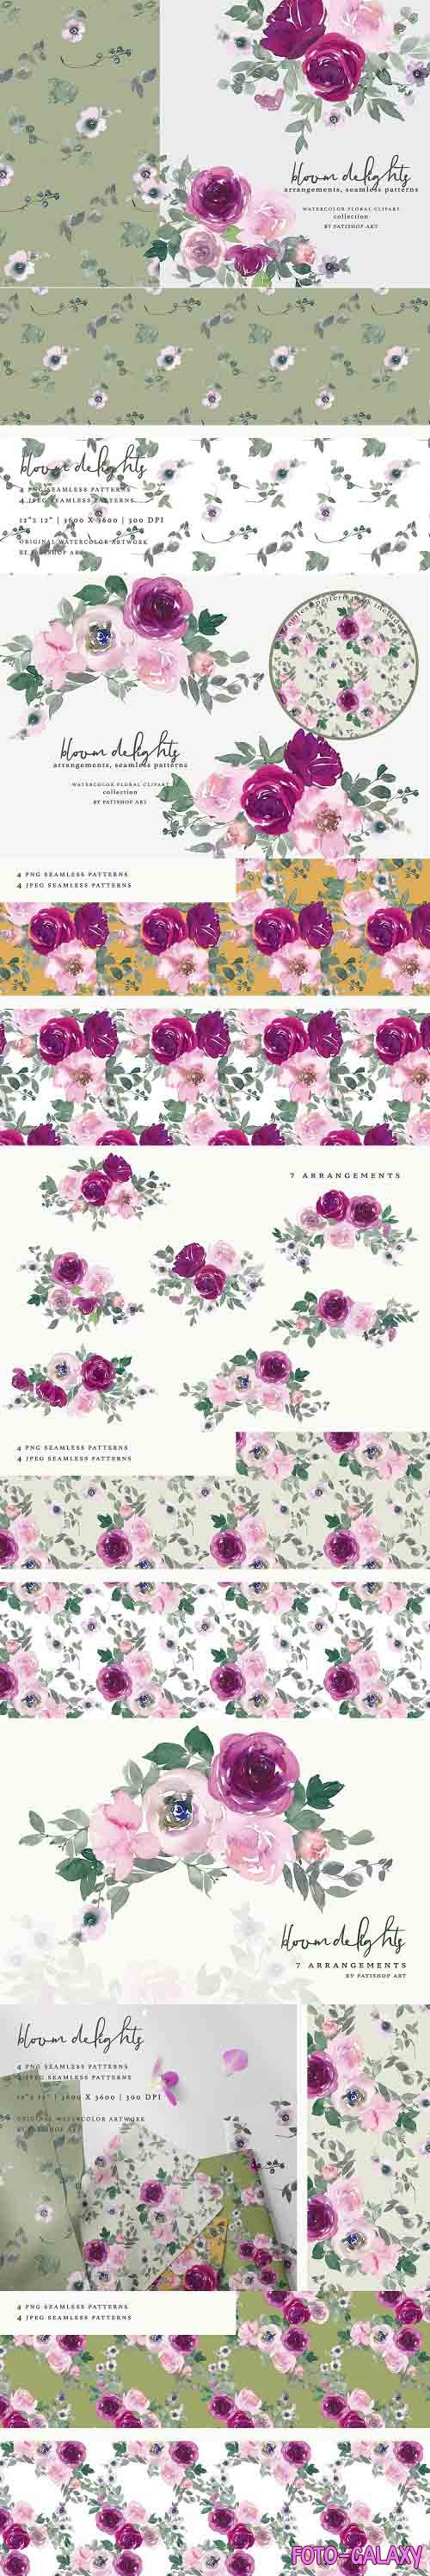 Watercolor Floral Clipart & Patterns - 6186260